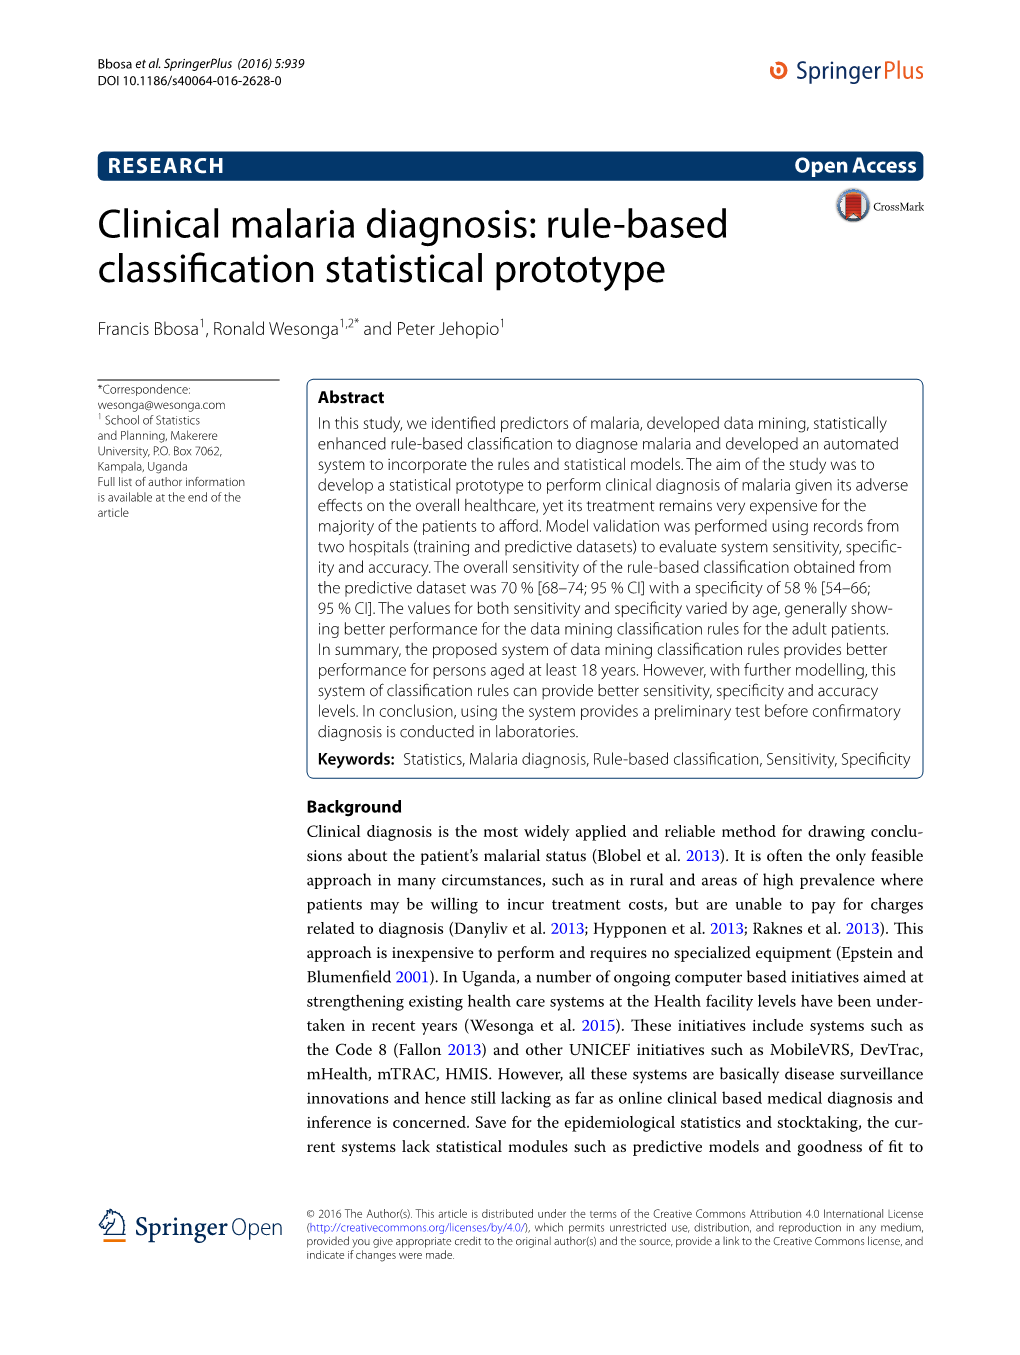 Clinical Malaria Diagnosis: Rule-Based Classification Statistical Prototype